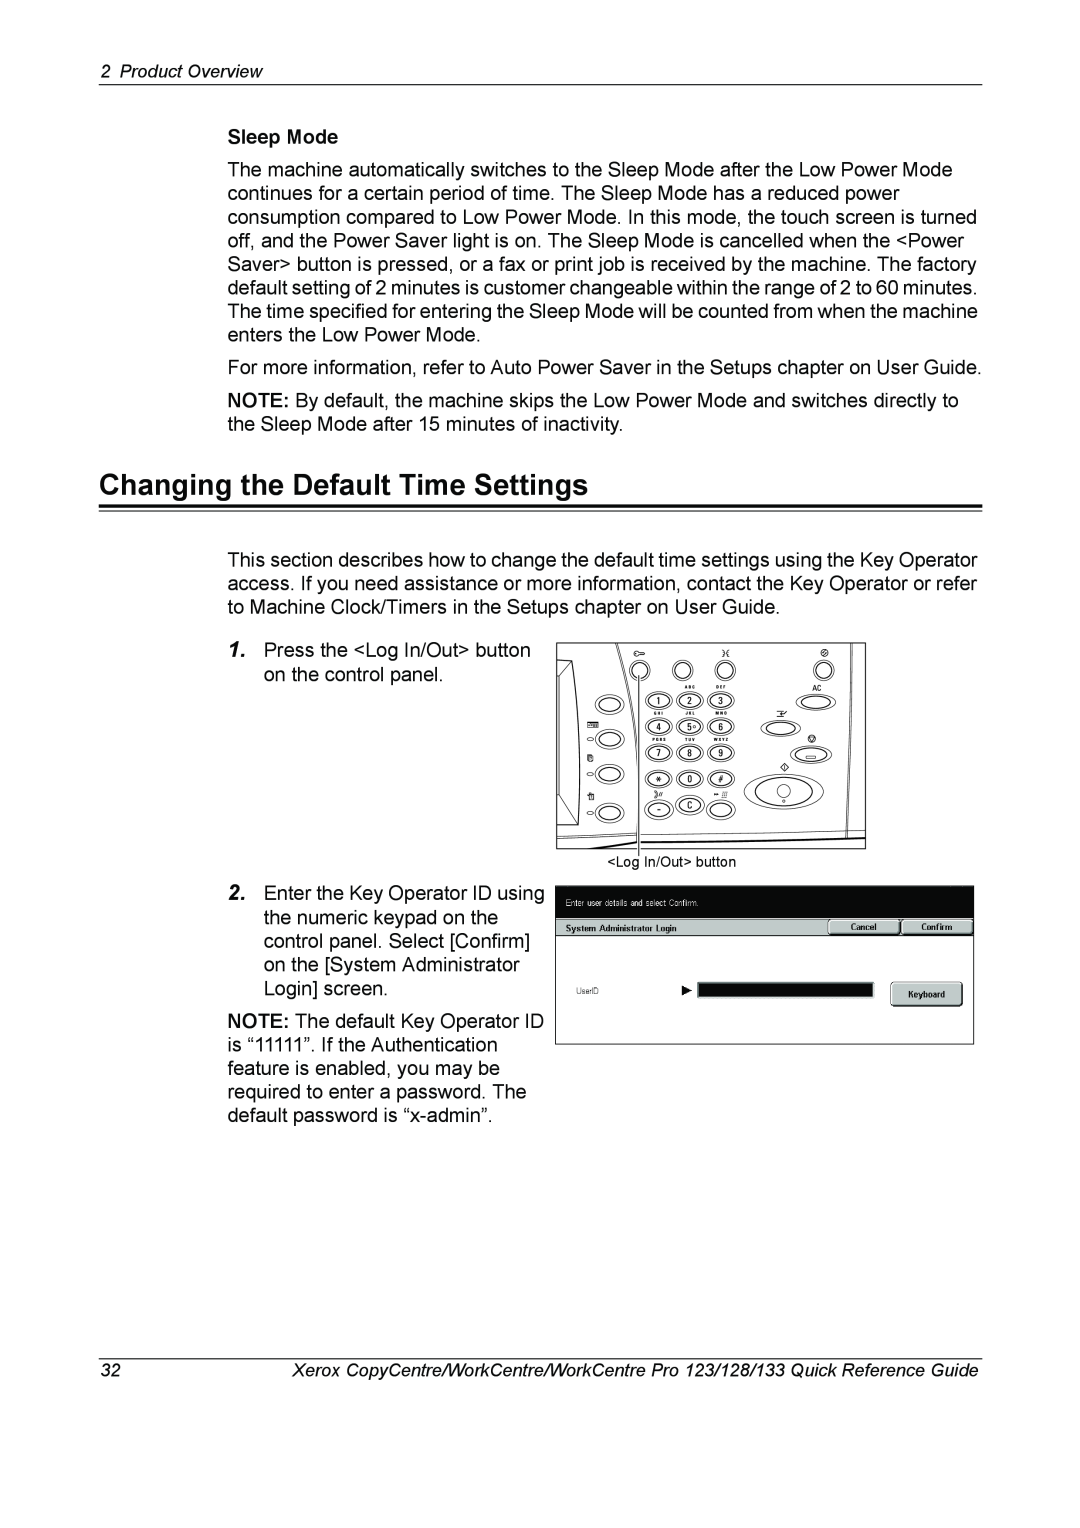 Xerox 604P18037 manual Changing the Default Time Settings, Sleep Mode 